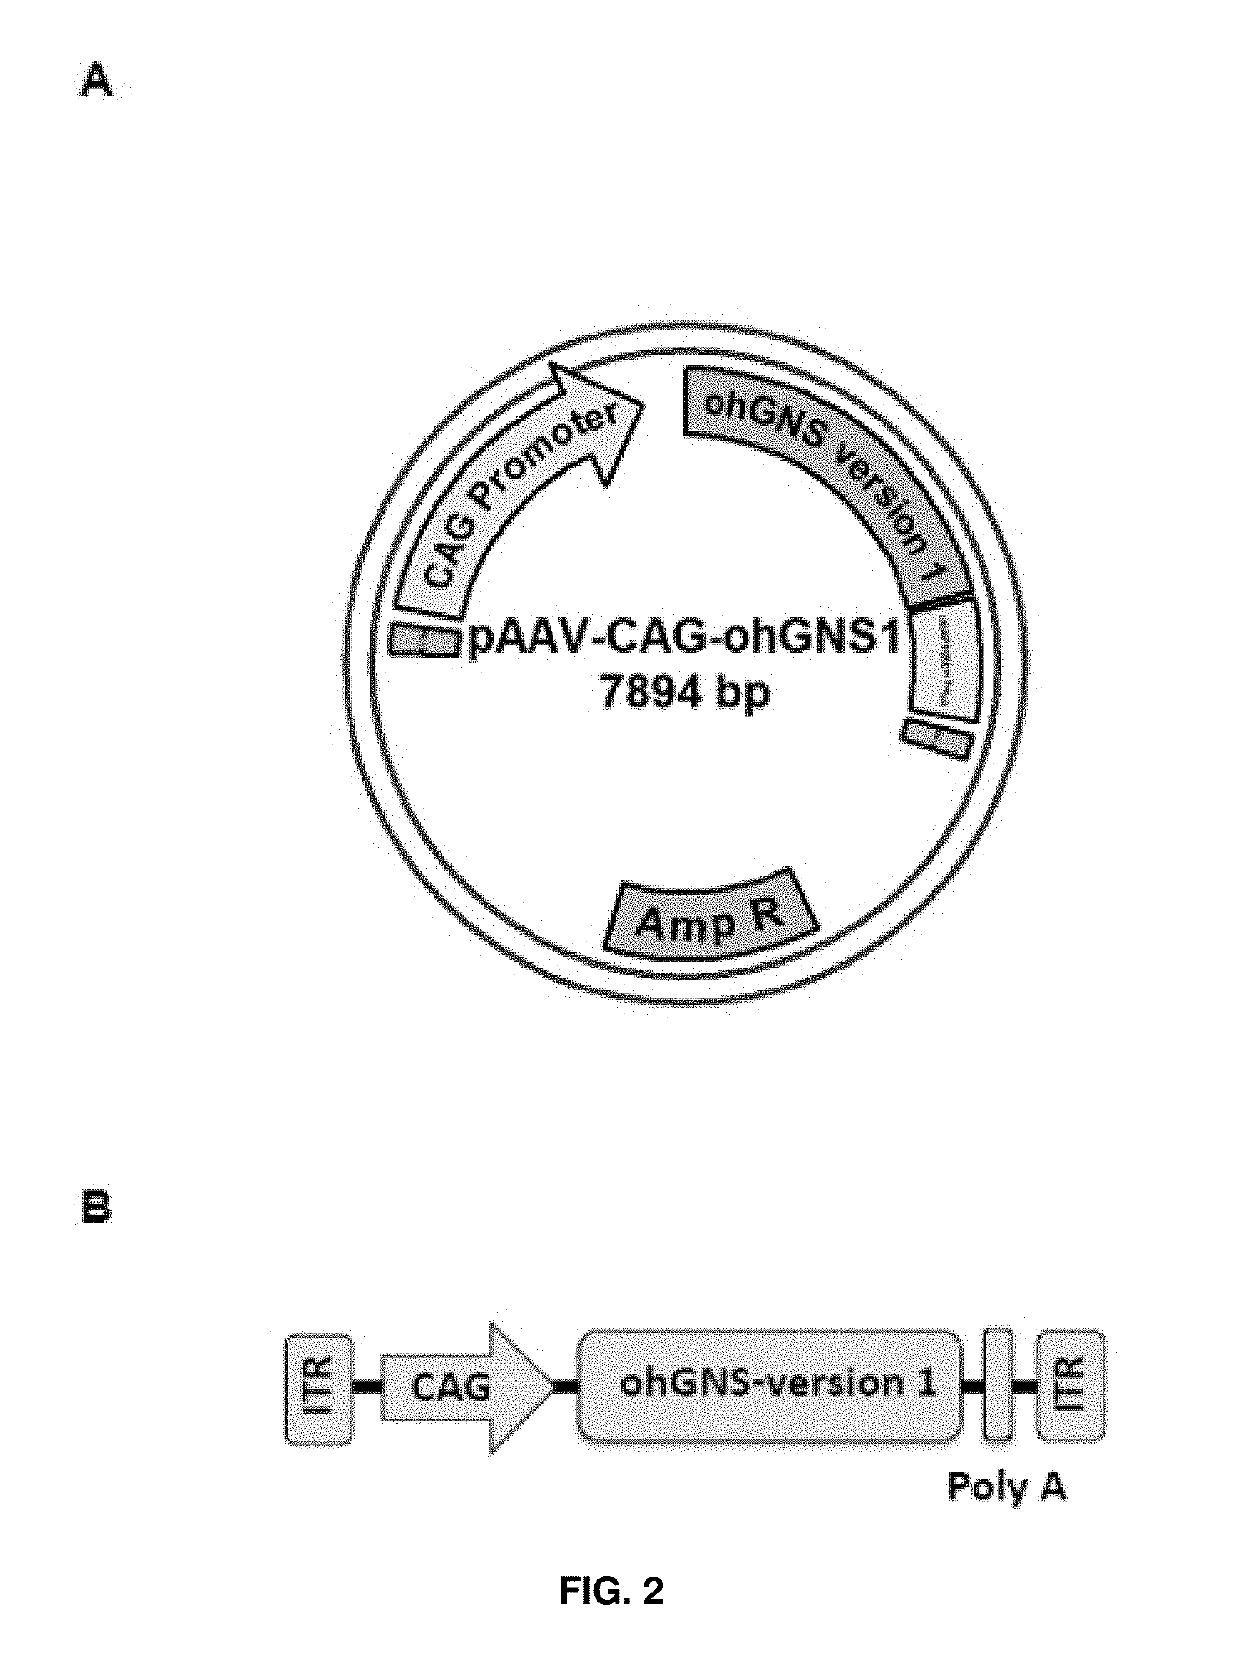 Adenoassociated virus vectors for the treatment of mucopolysaccharidoses